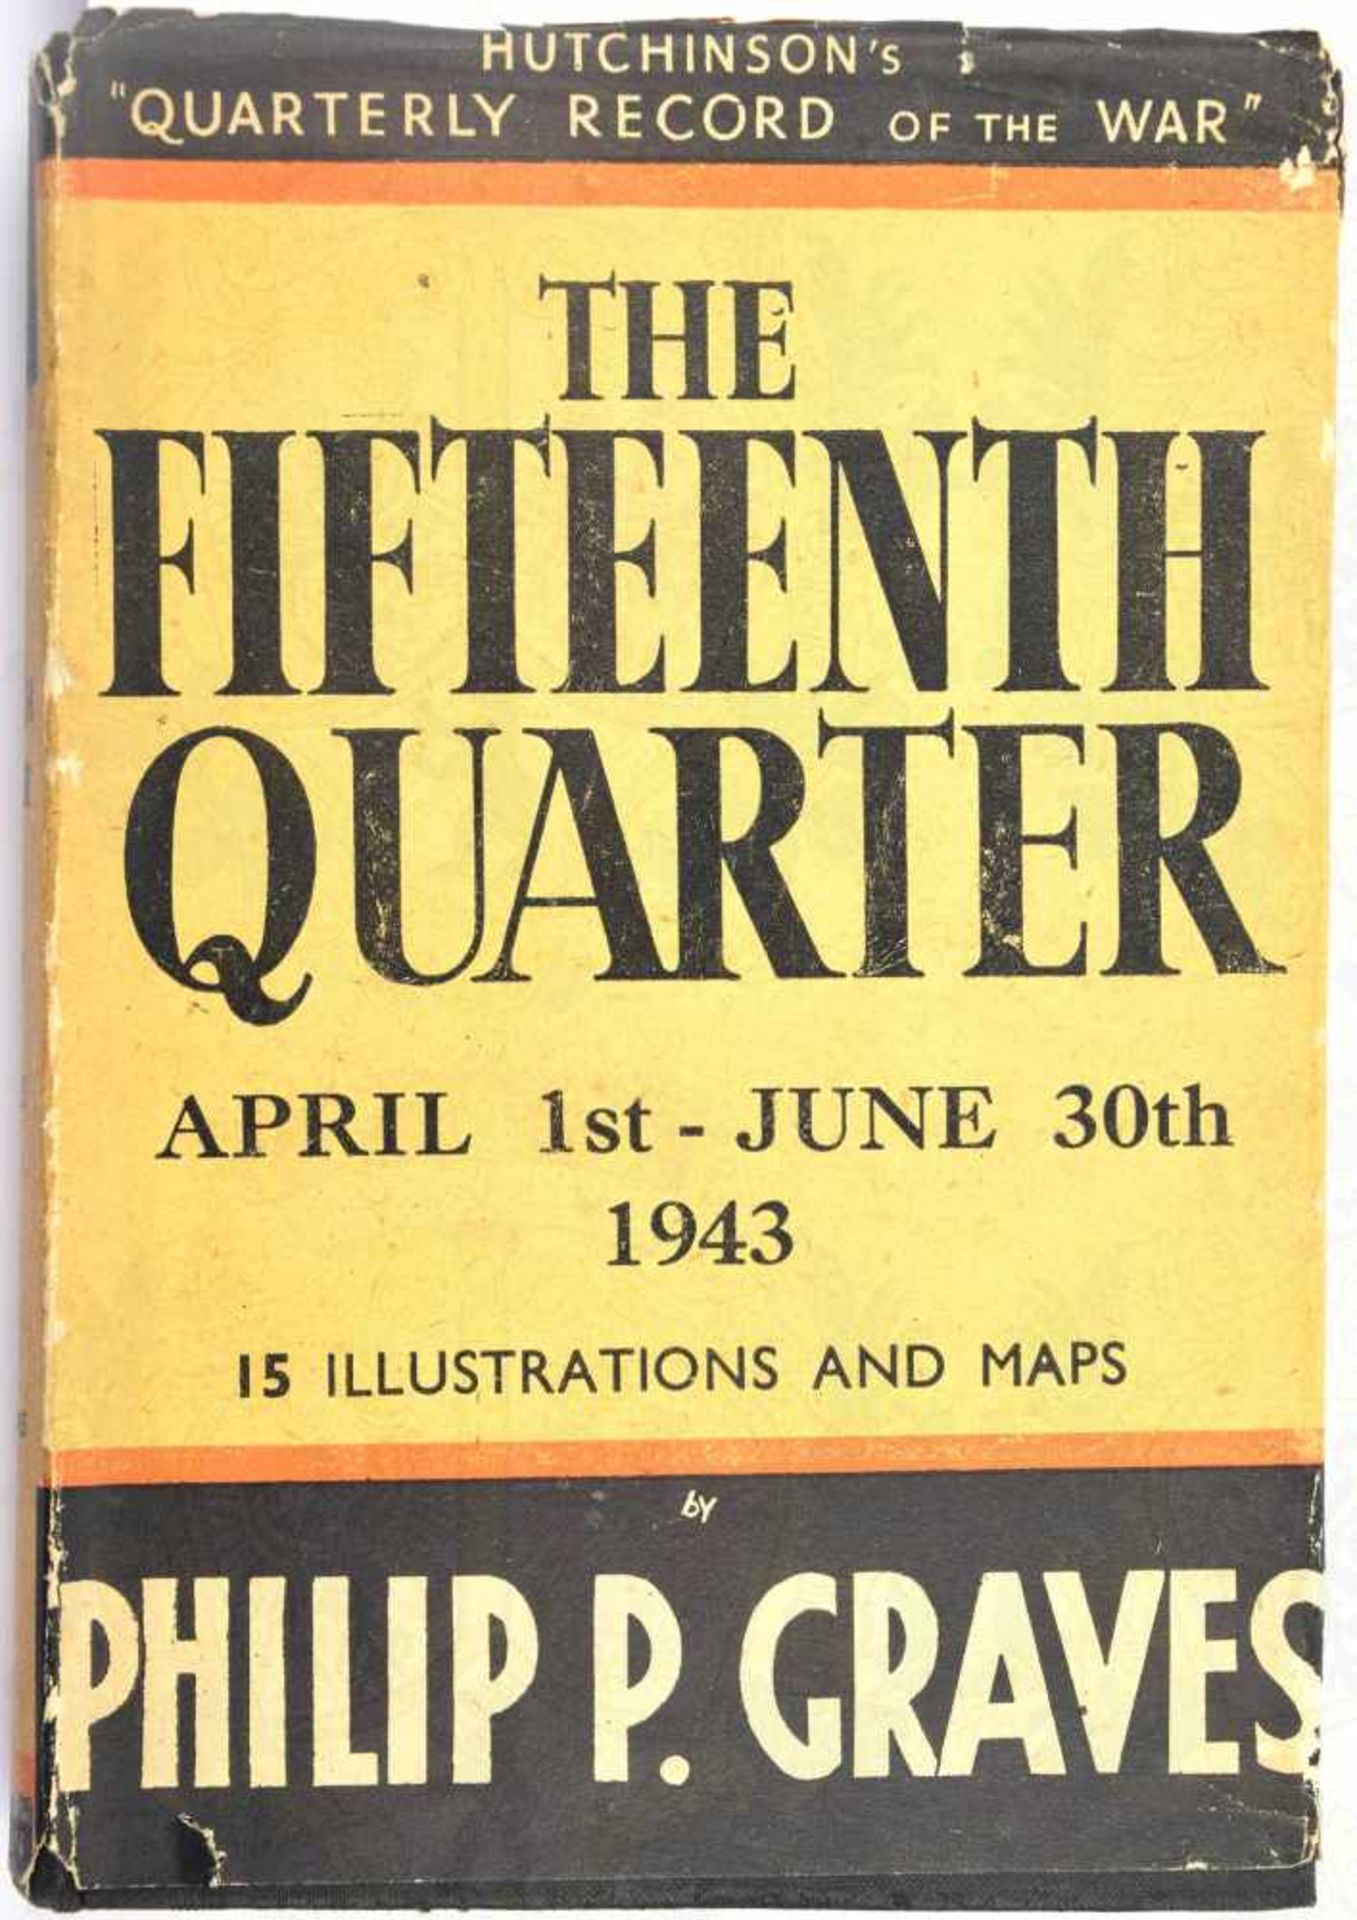 THE FIFTEENTH QUARTER APRIL 1ST - JUNE 30TH 1943, Ph. P. Graves, London um 1943, 274 S., engl. Text,